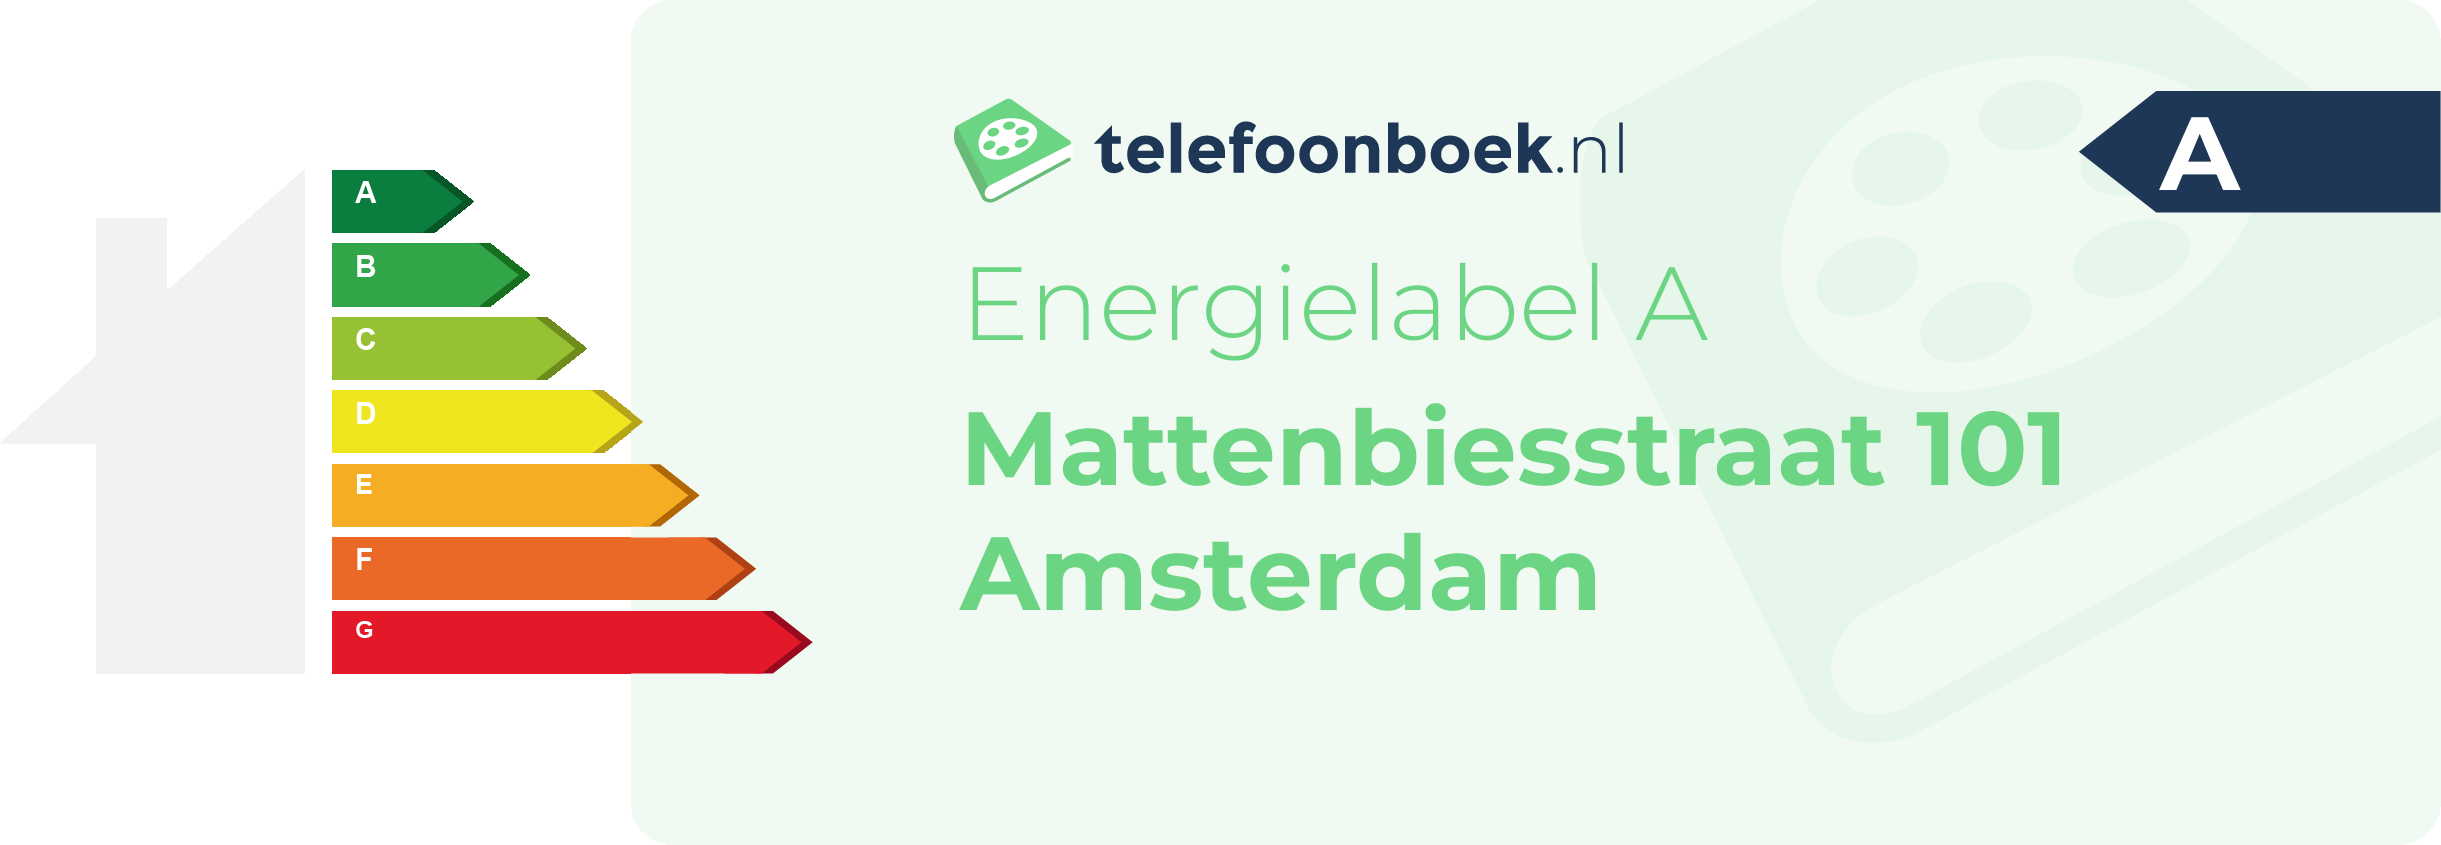 Energielabel Mattenbiesstraat 101 Amsterdam